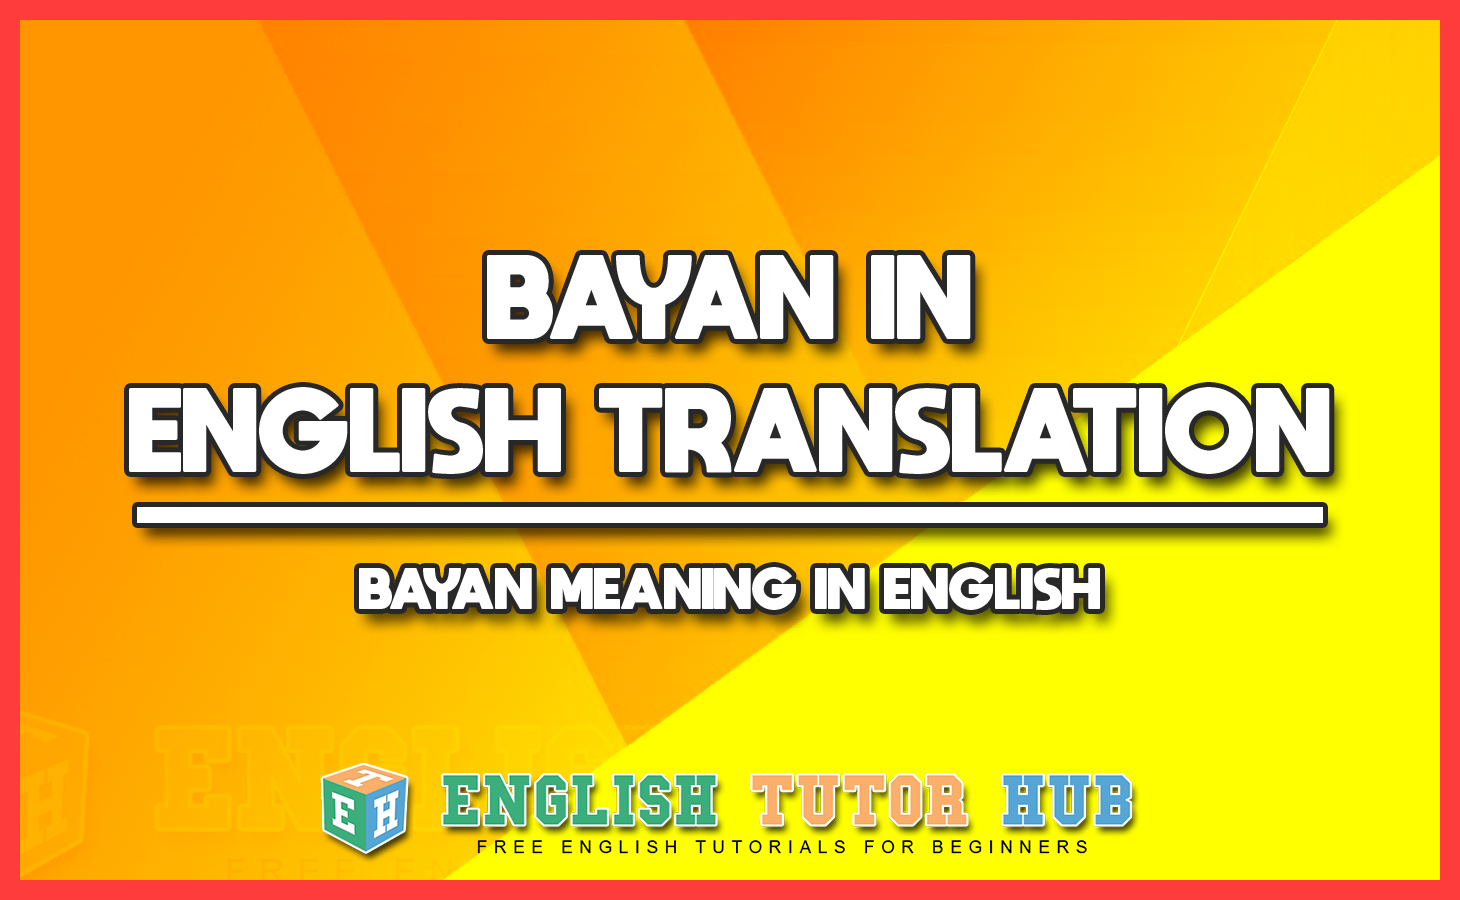 BAYAN IN ENGLISH TRANSLATION - BAYAN MEANING IN ENGLISH